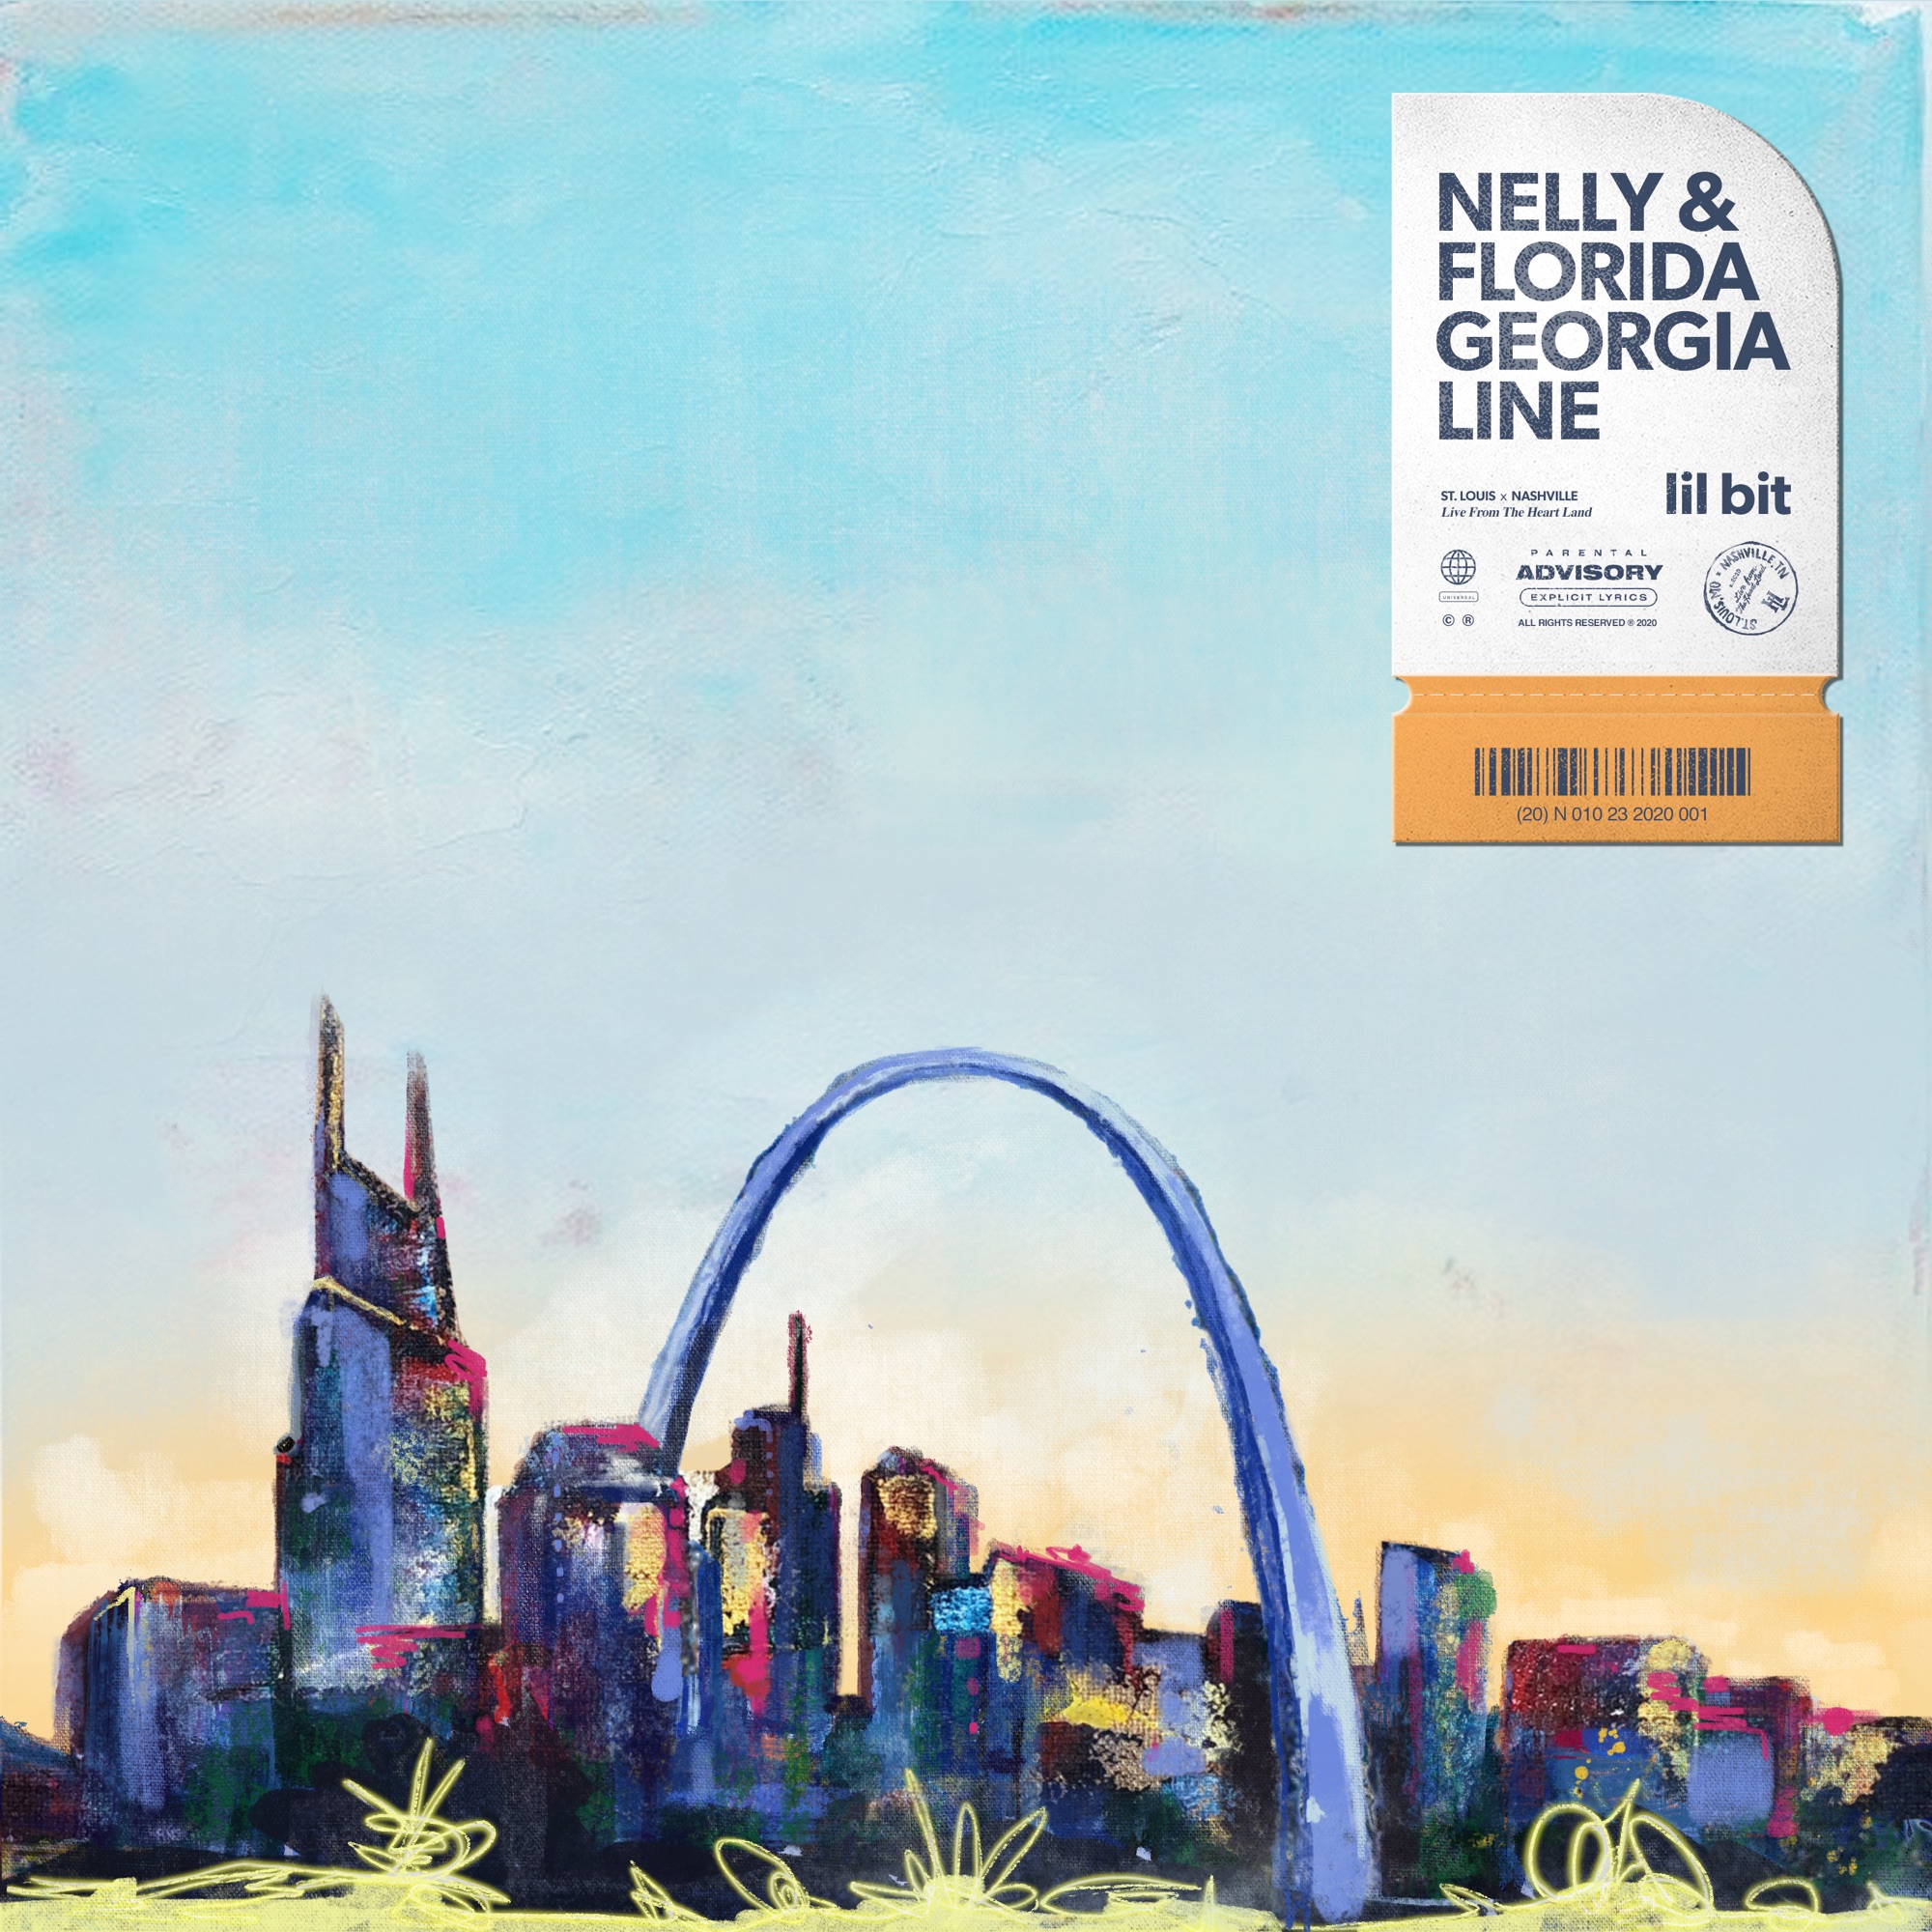 Nelly & Florida Georgia Line - Lil Bit - Single